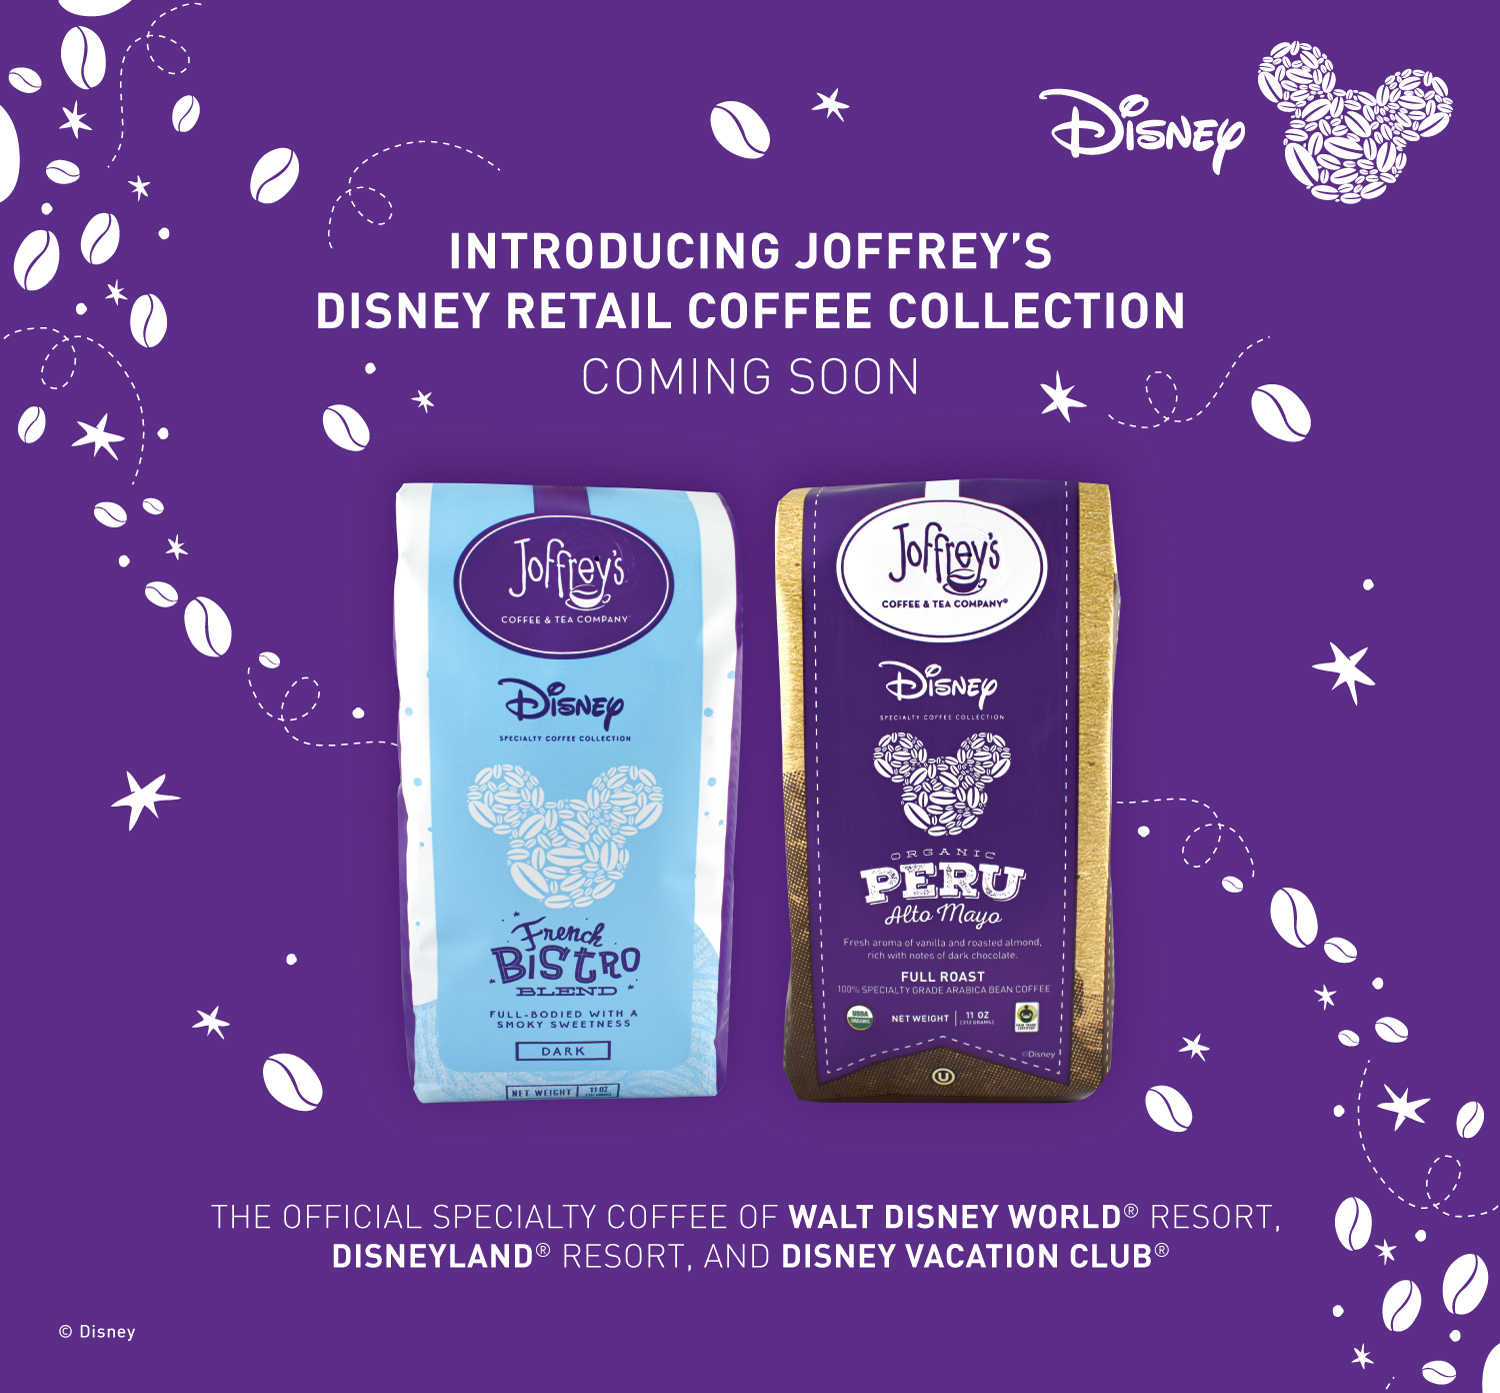 http://www.disneyfoodblog.com/wp-content/uploads/2018/06/PRESS-Joff-Disney-Retail-Bags-5-30-2018.jpg